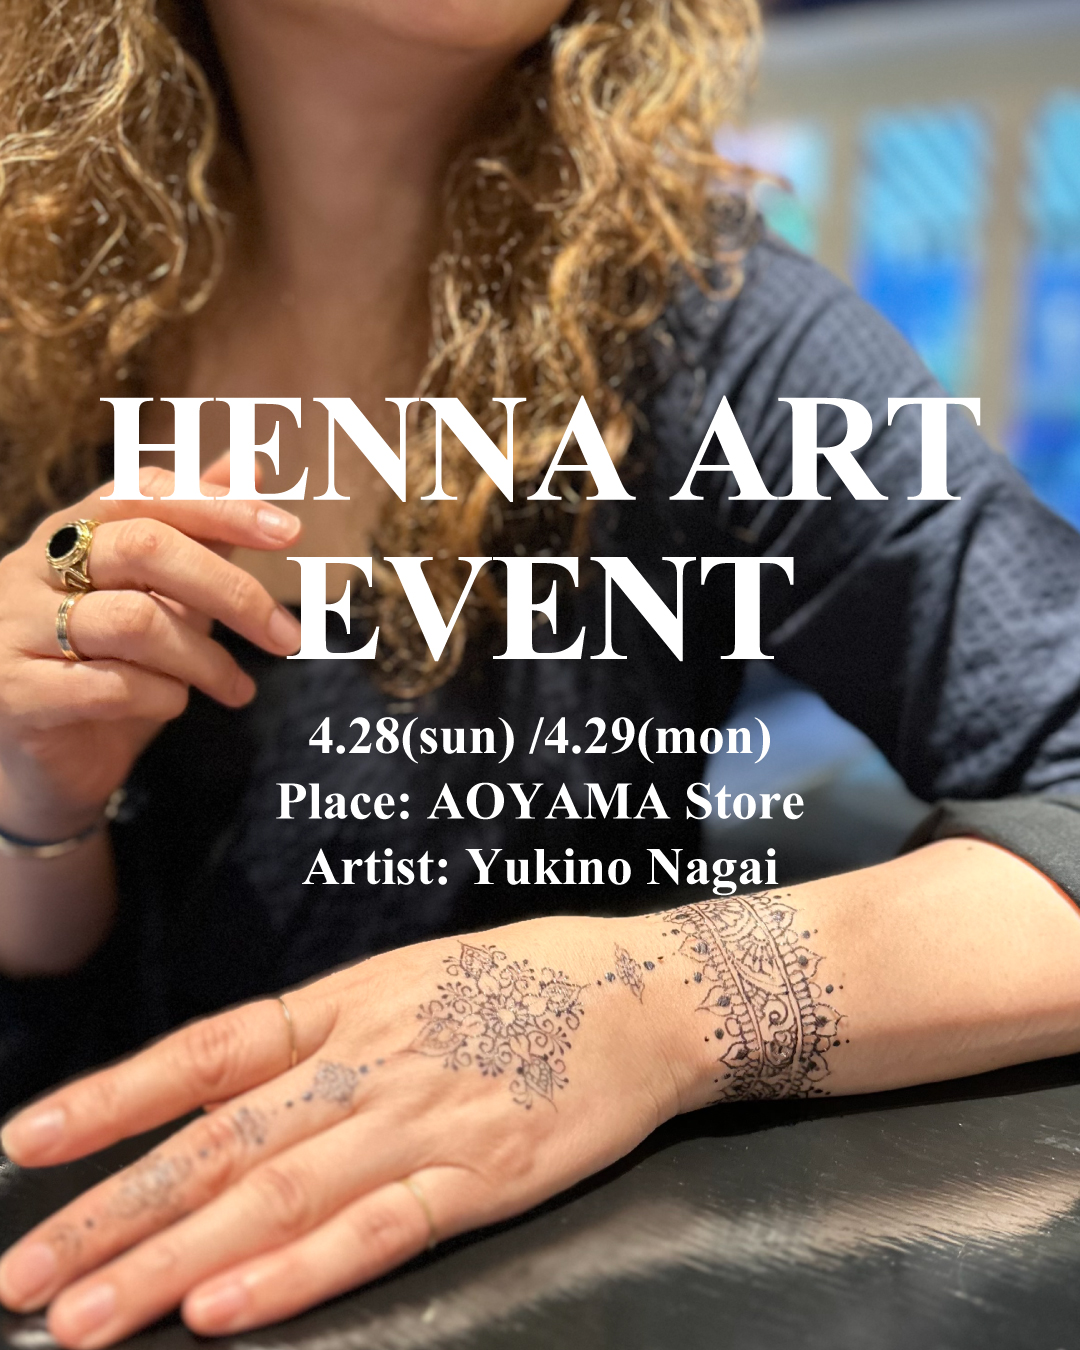 HENNA ART EVENT